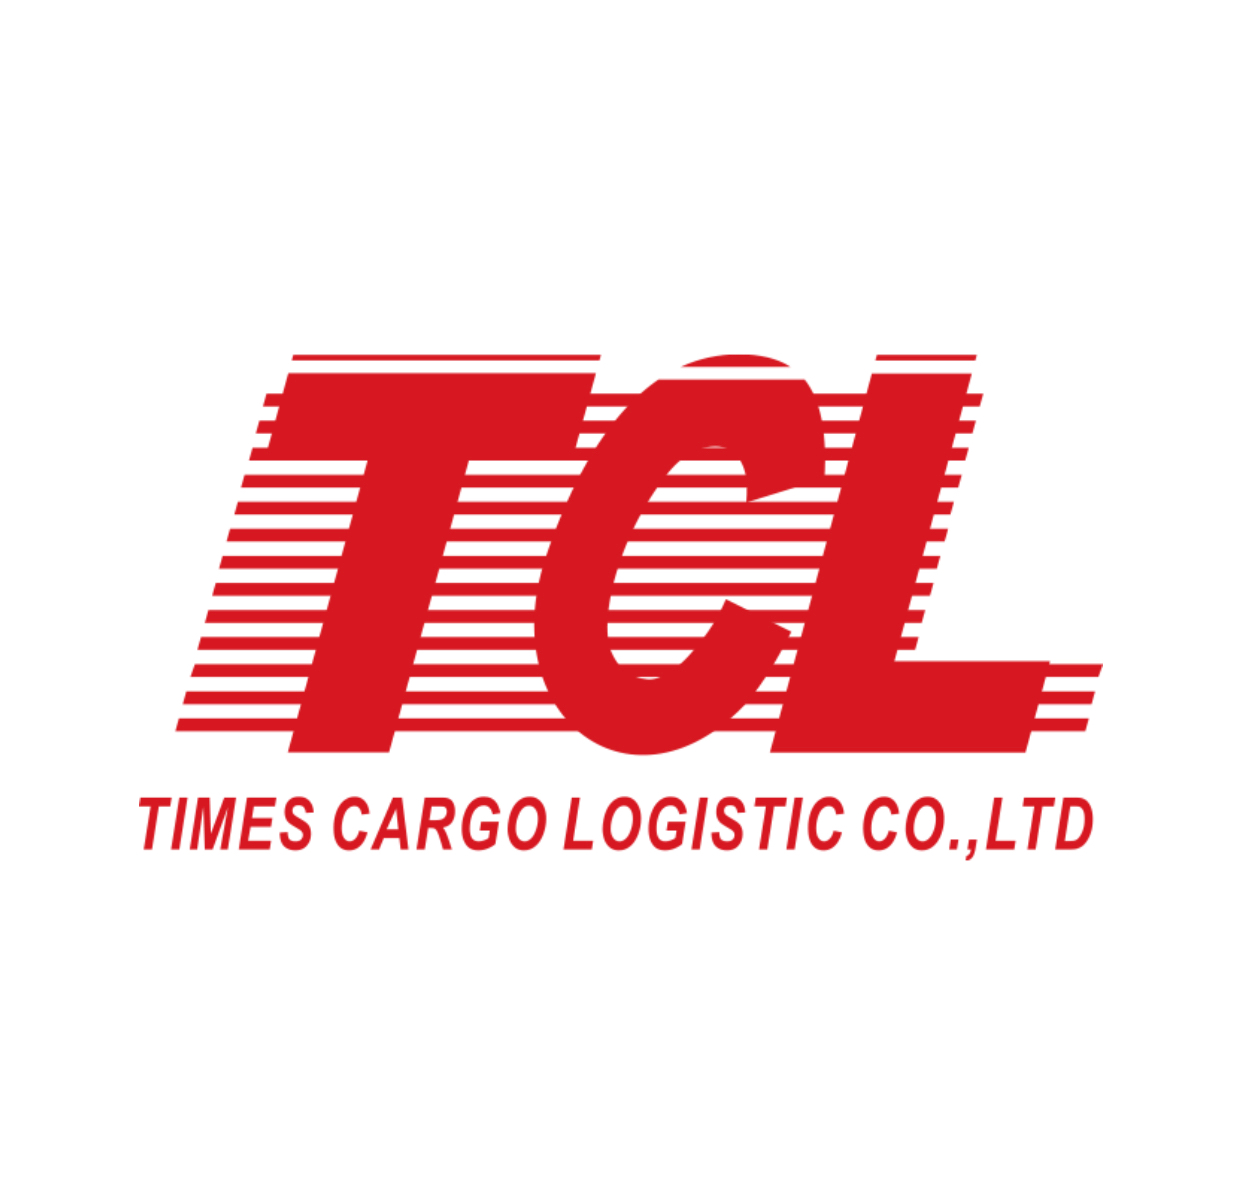 Logo Times Cargo Logistic